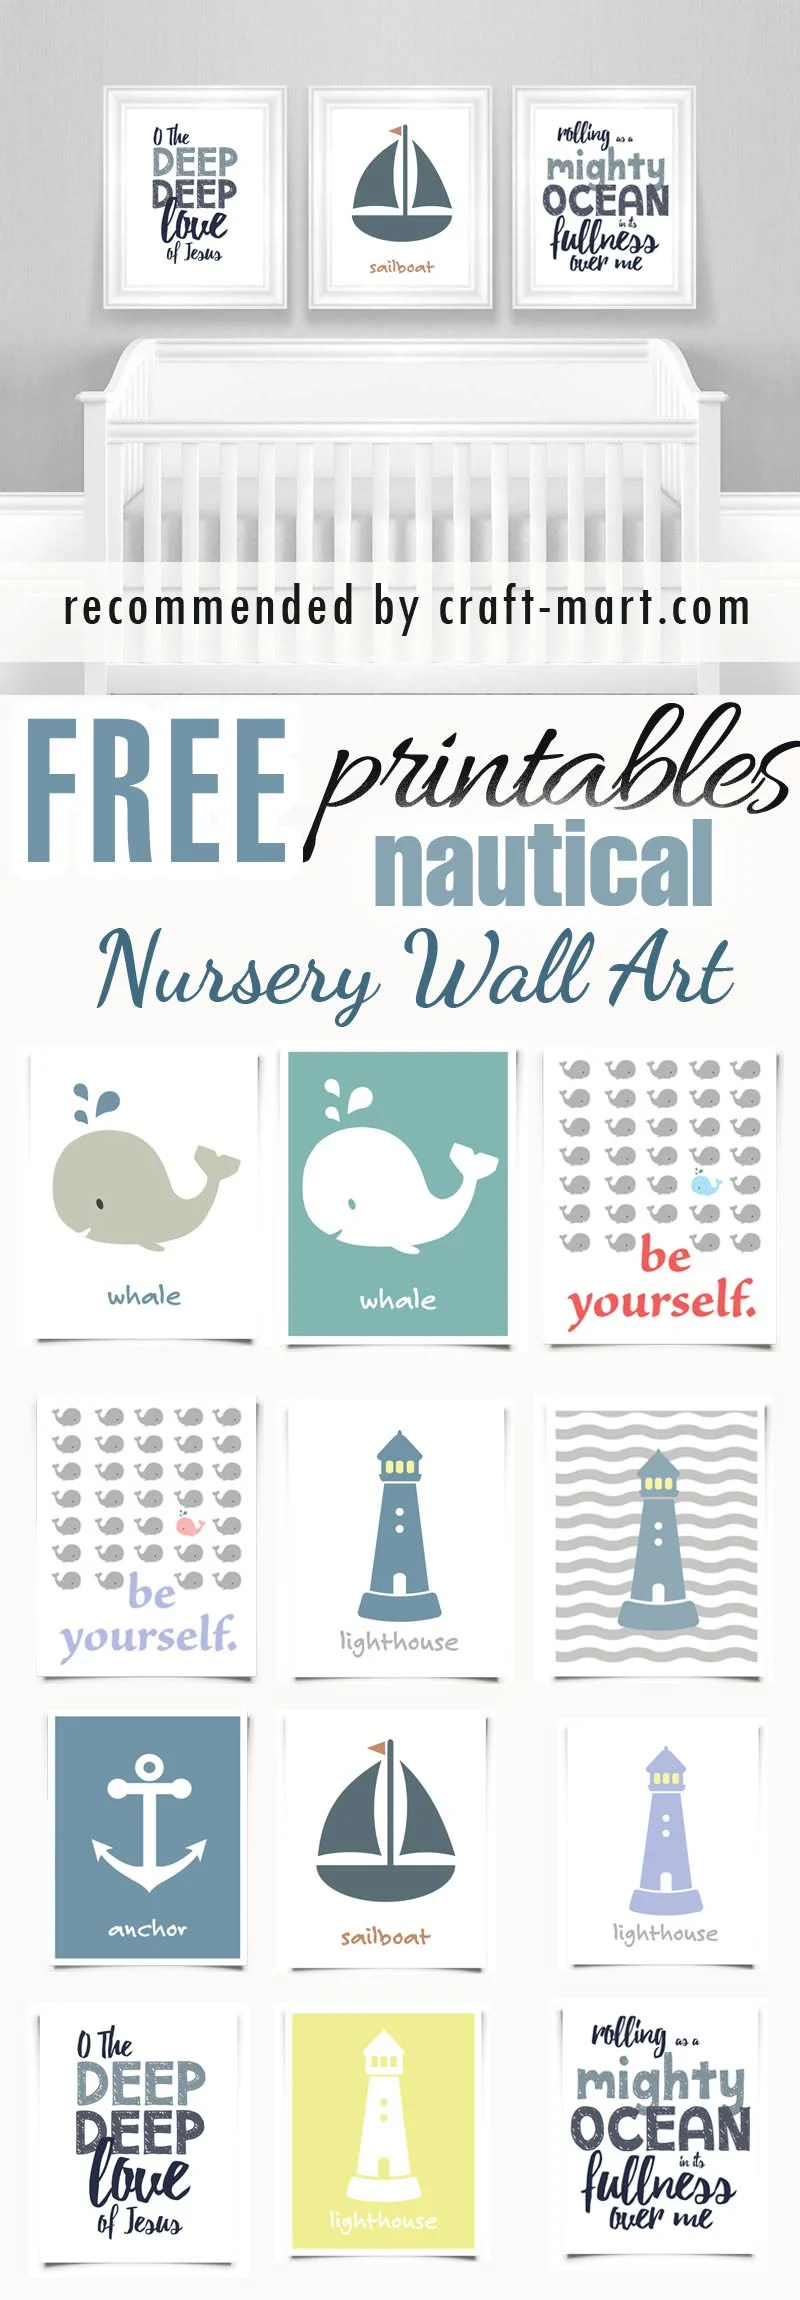 Nautical Nursery Art Prints - free printables #freeprintables #freenurseryprintables #freenurserywallart #cutenurseryprints #nauticalnurseryprintables #freenurseryprints